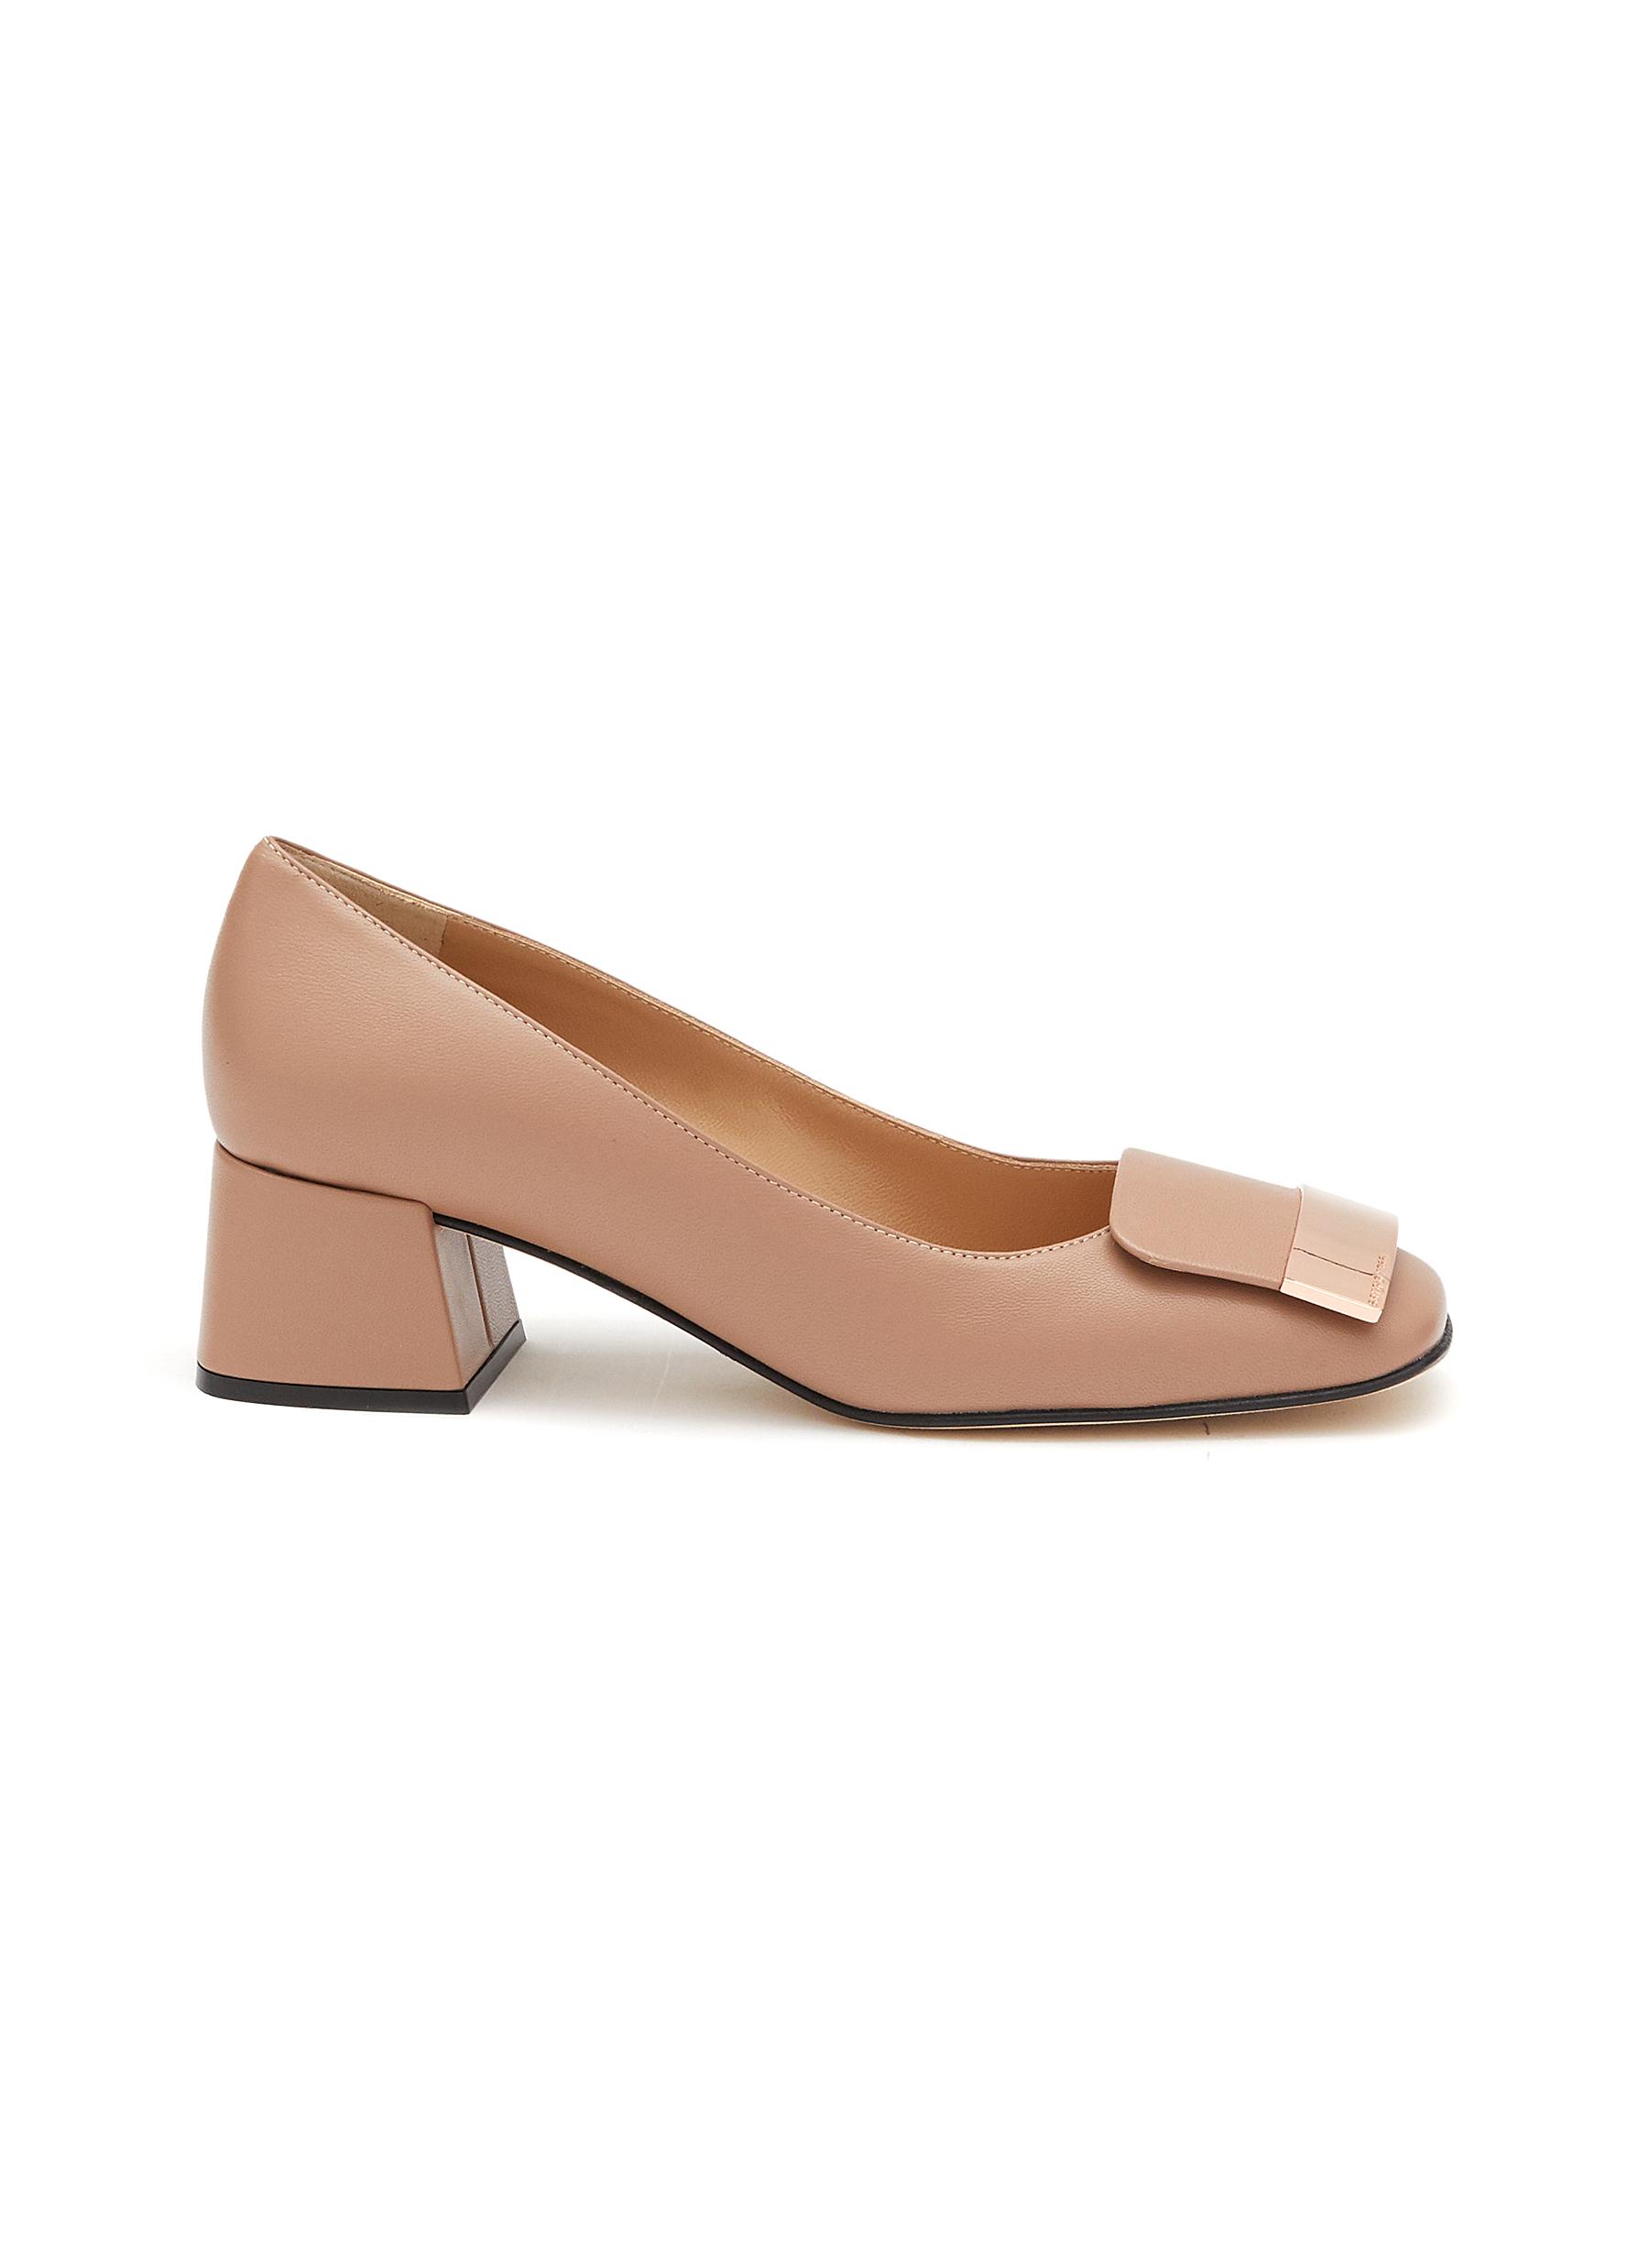 Buy Saint G Embellished Leather Block Heel Pumps - Heels for Women 21932462  | Myntra